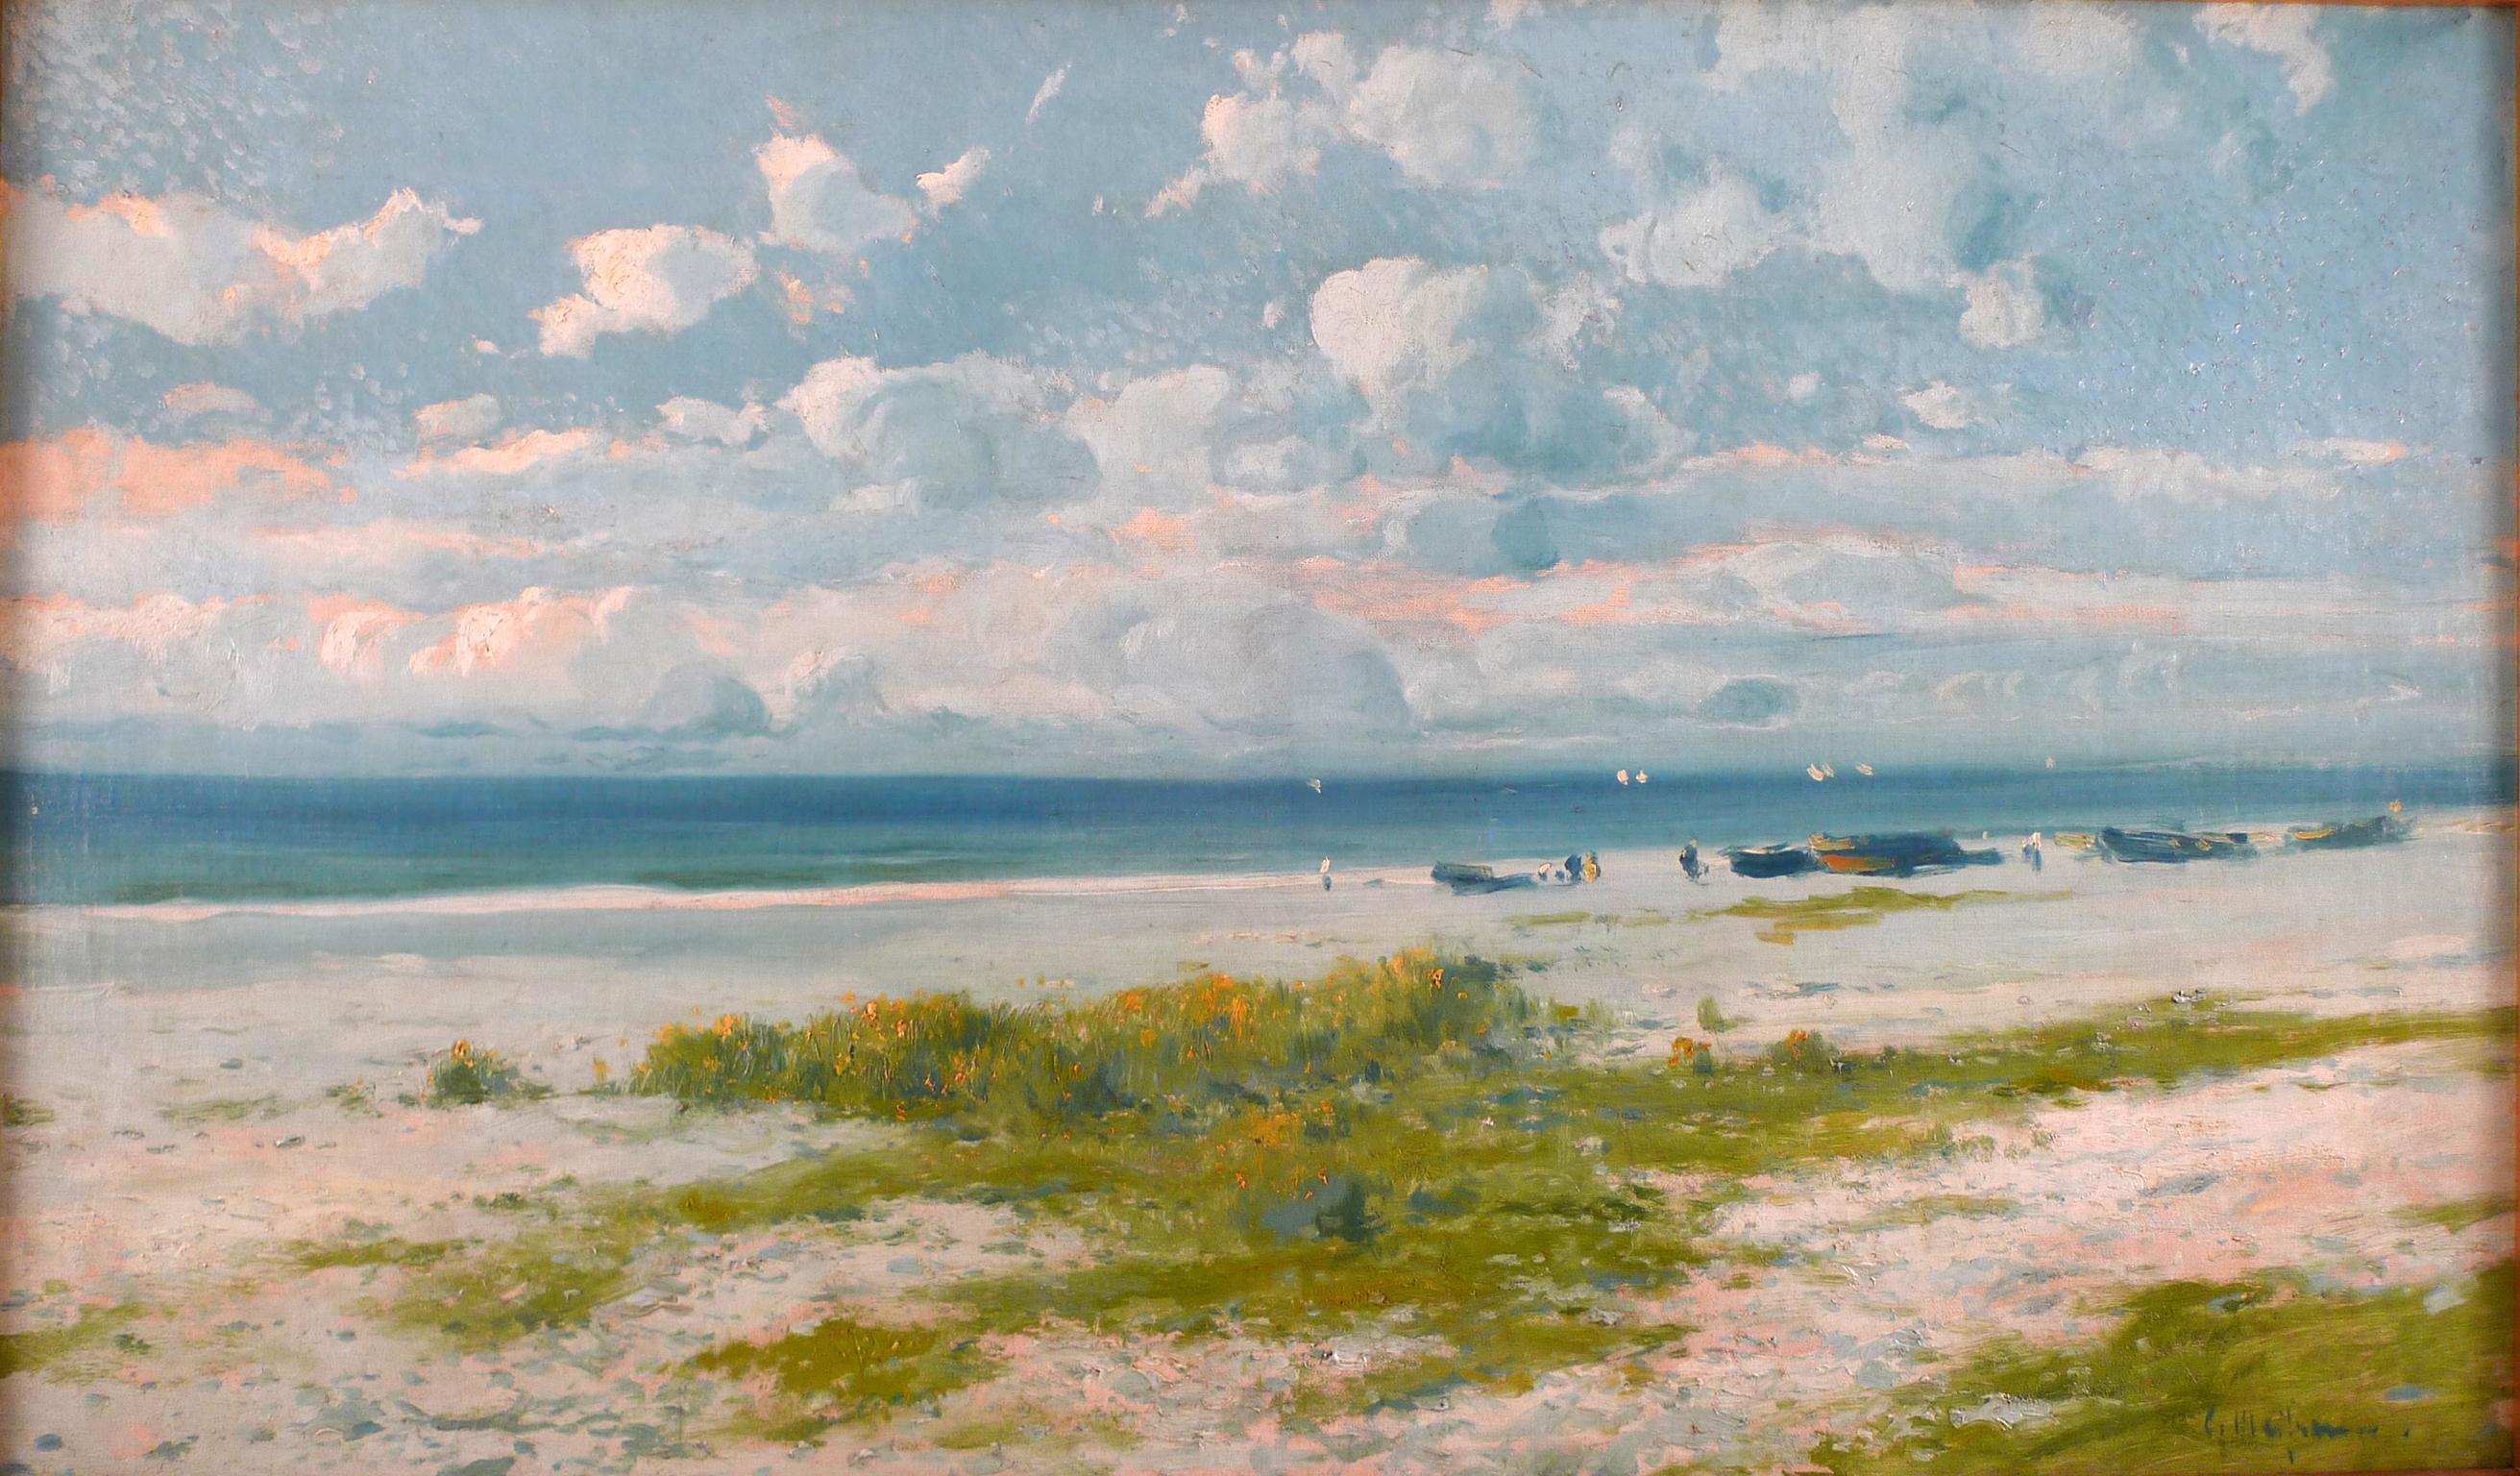 Eliseo Meifrén Roig Figurative Painting - "Boats stranded On The Beach" Early 20th Century Oil on Canvas by Eliseo Meifren